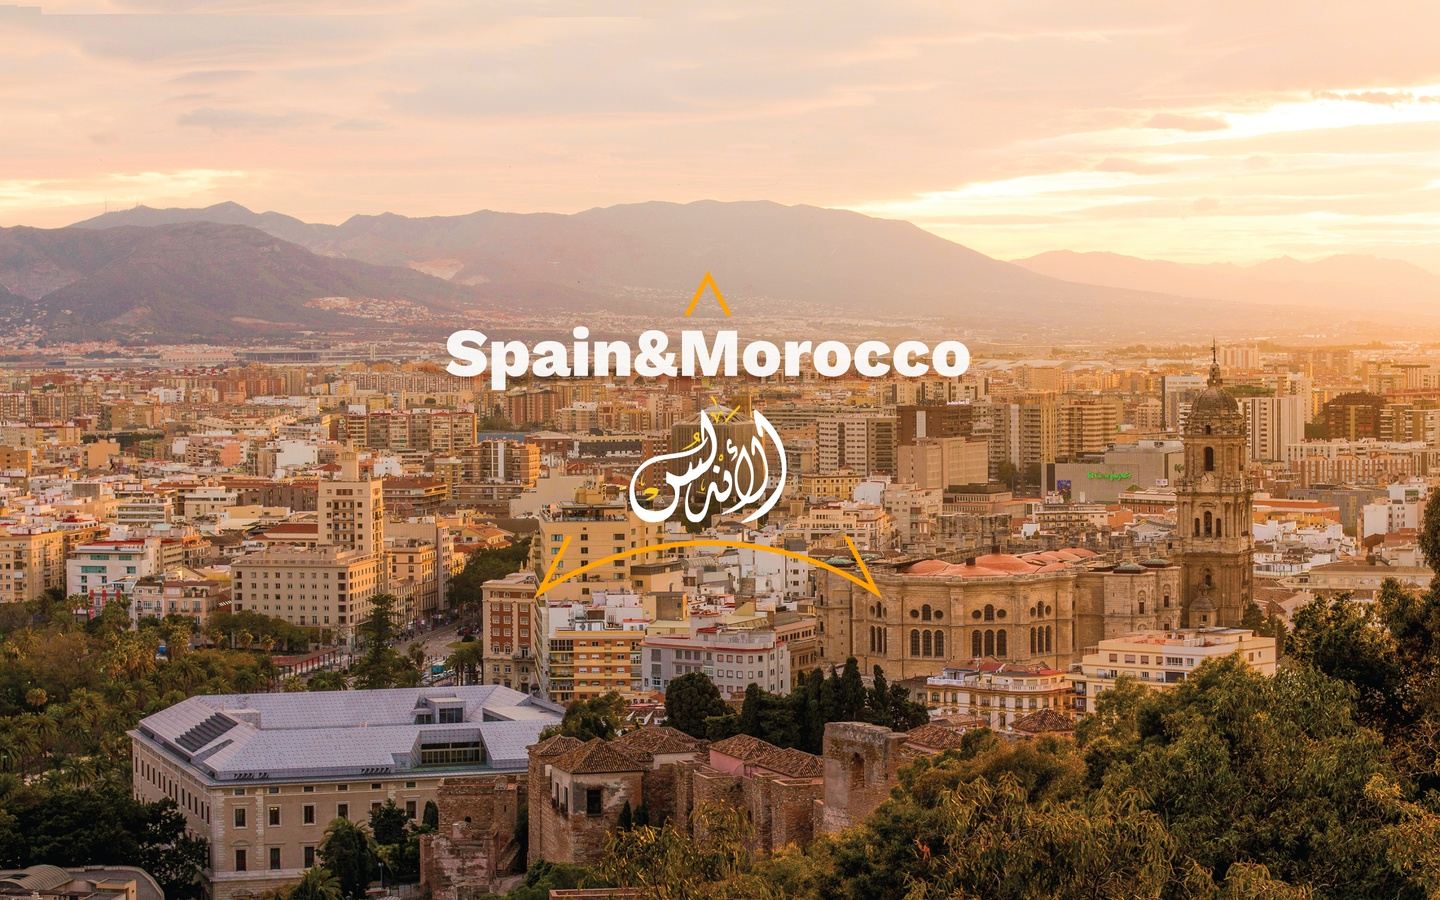 Spain & Morocco